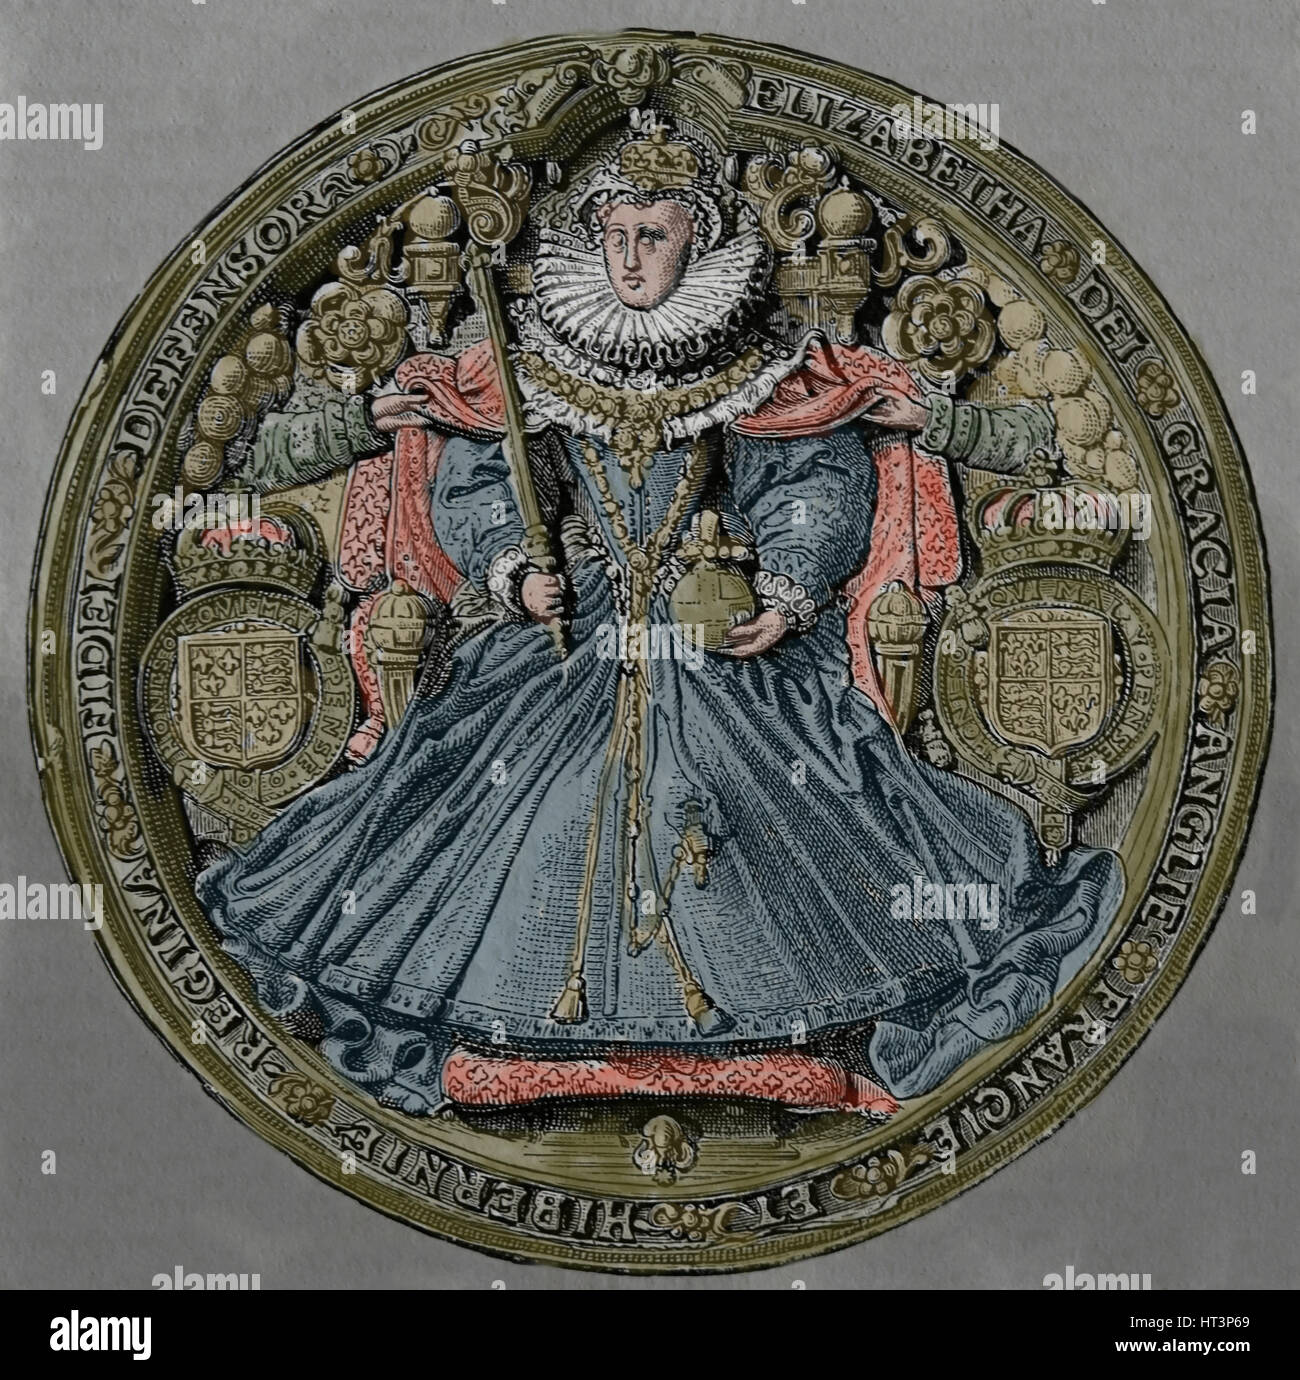 Elizabeth I (1533-1603). Queen of Englad and Ireland. Tudor dynasty. Engraving. Medallion. Stock Photo